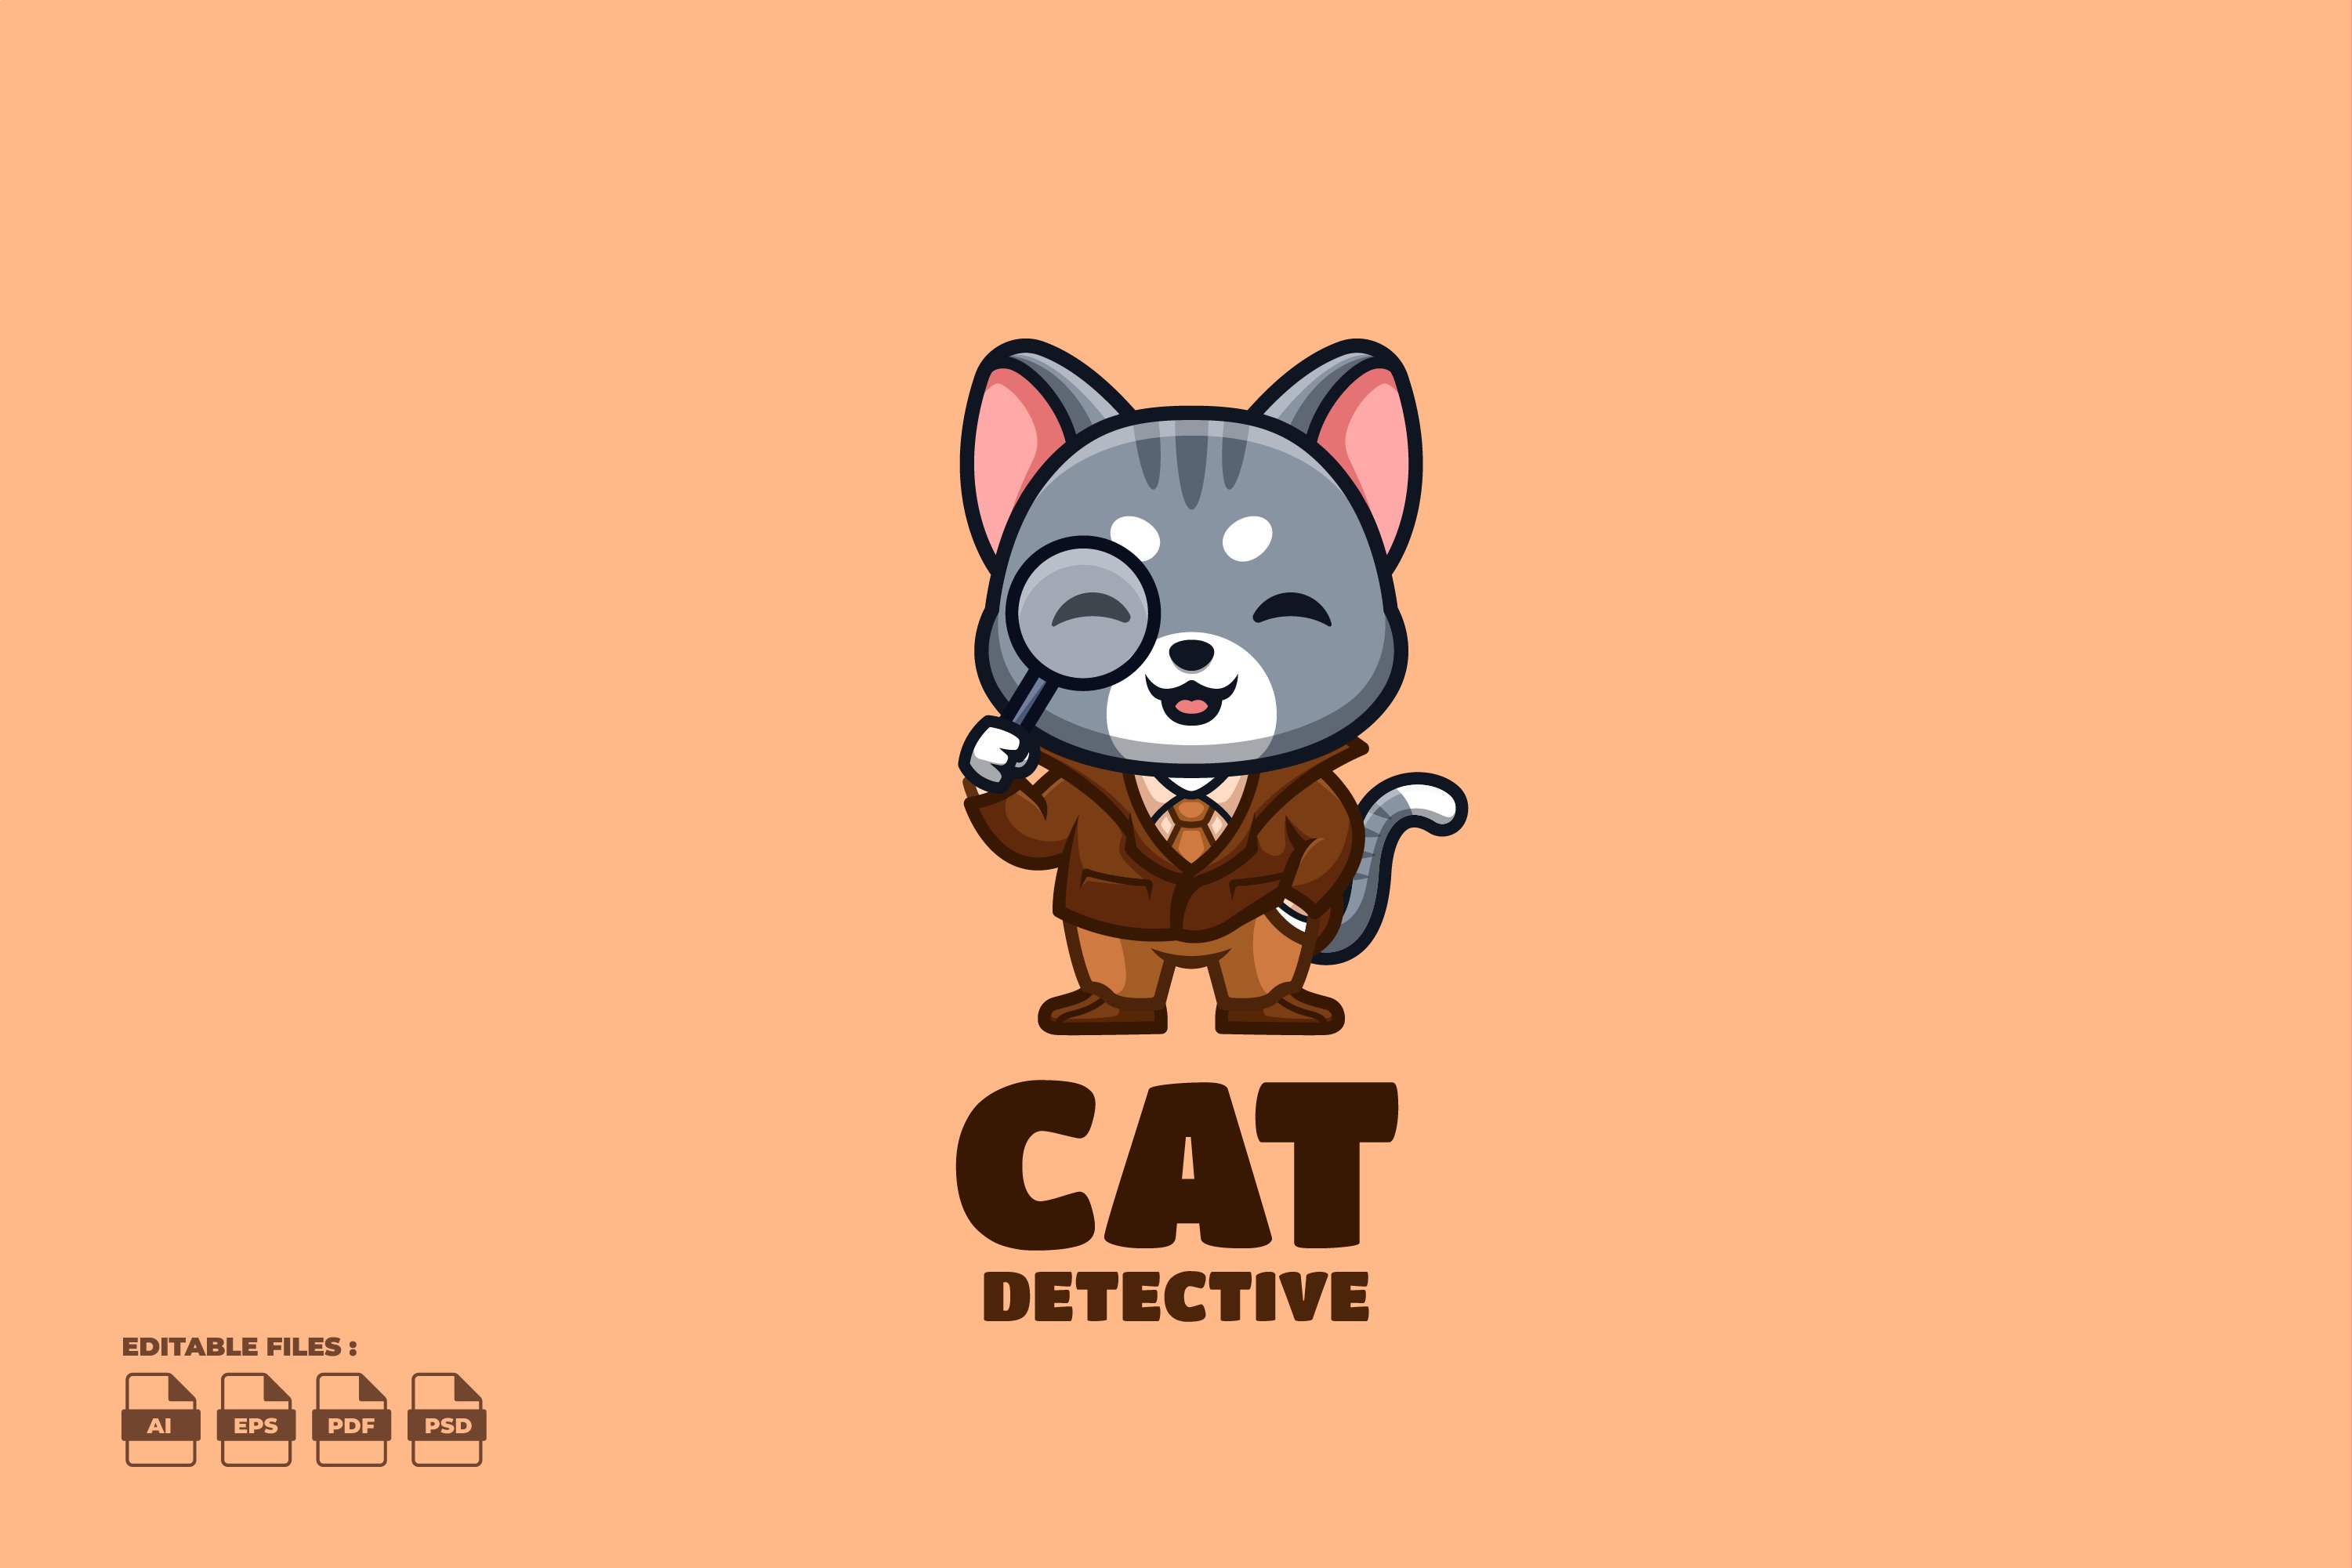 Detective Domestic Cat Cute Mascot L cover image.